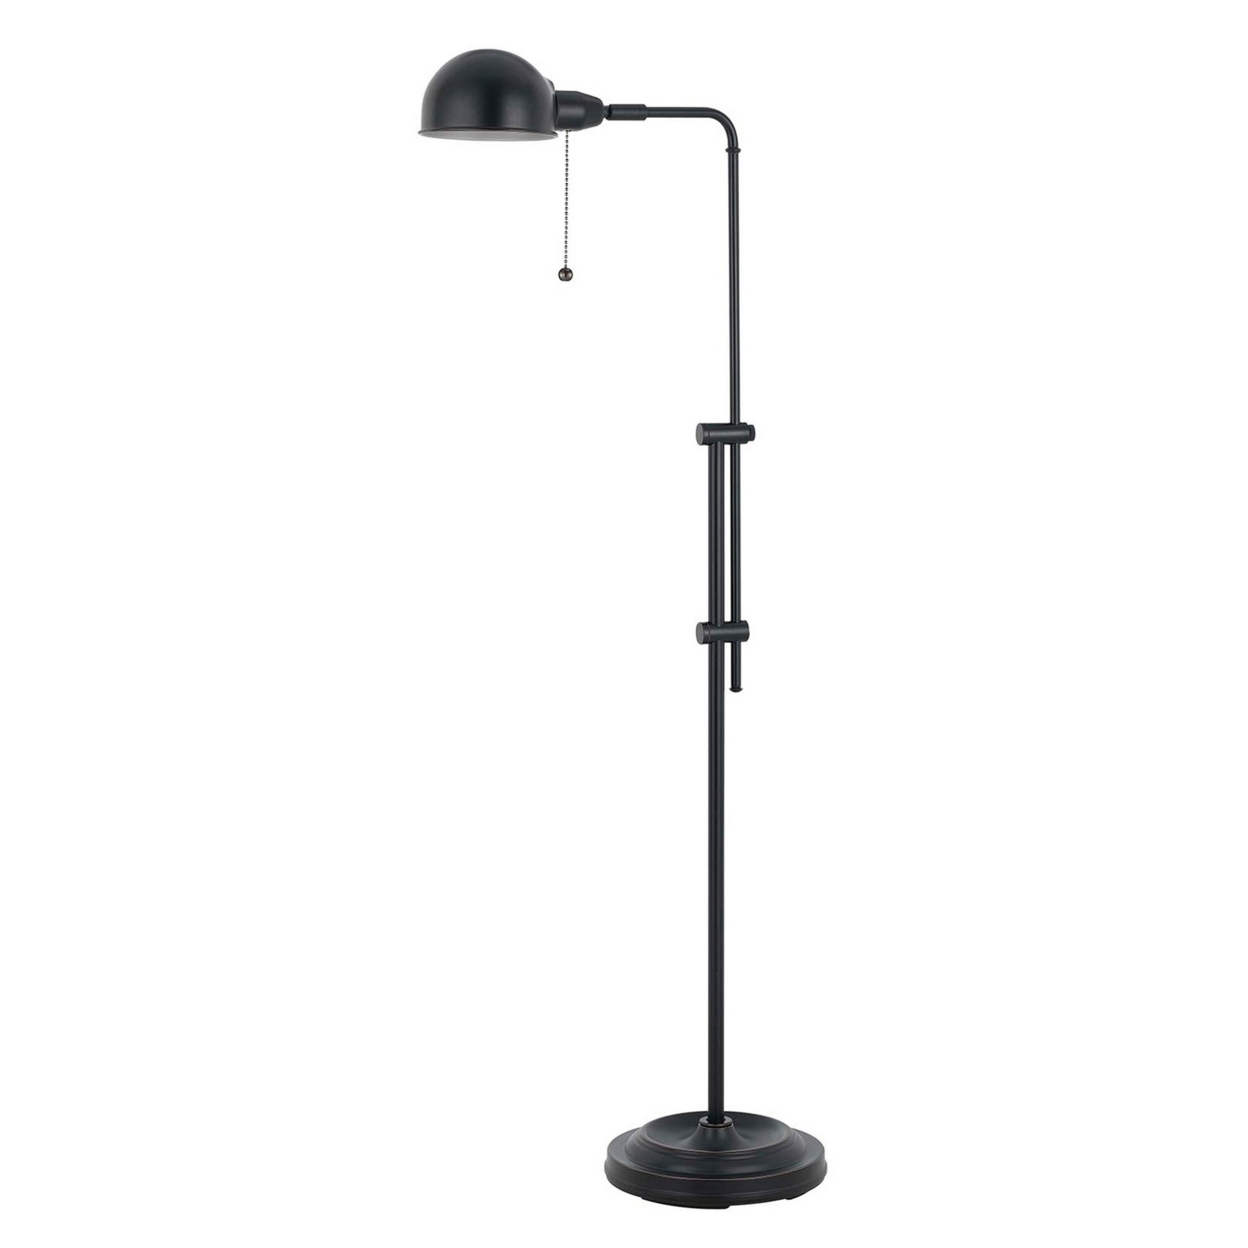 Adjustable Height Metal Pharmacy Lamp With Pull Chain Switch, Black- Saltoro Sherpi